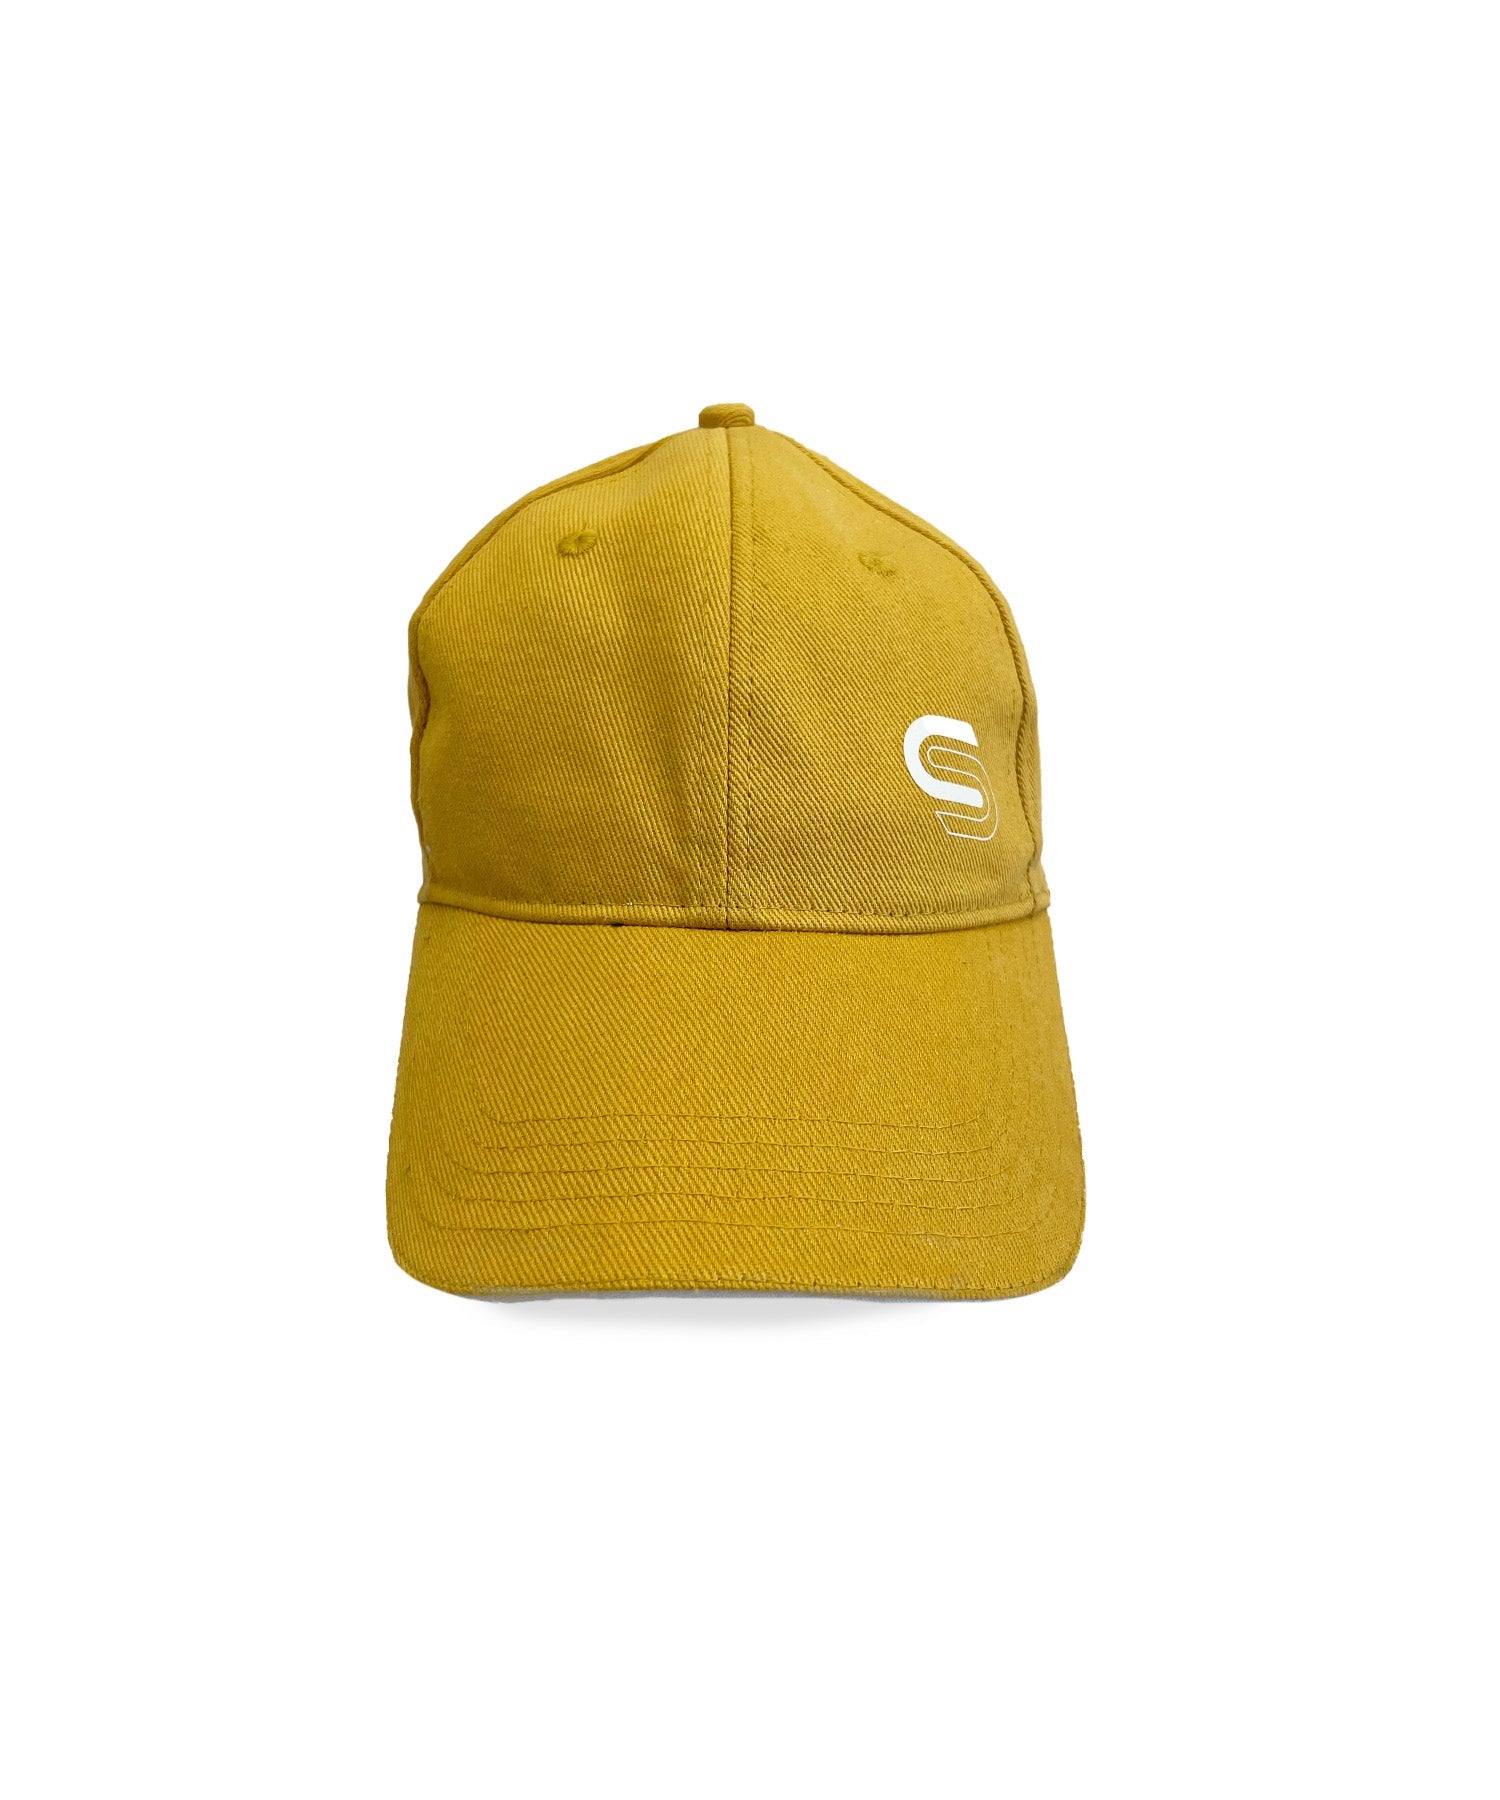 Basic Bro Cap - Hats